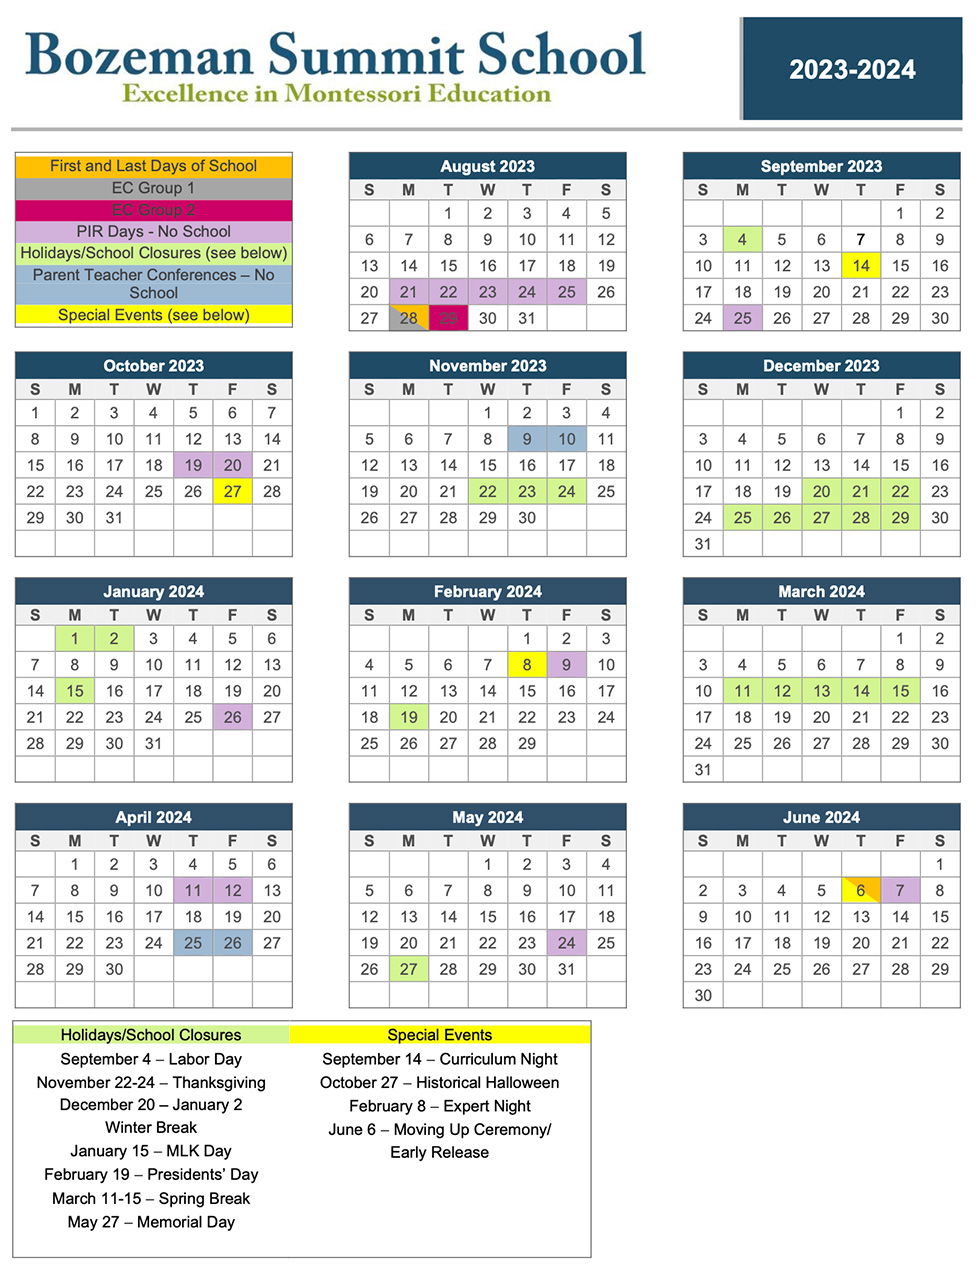 Bozeman Summit School Calendar